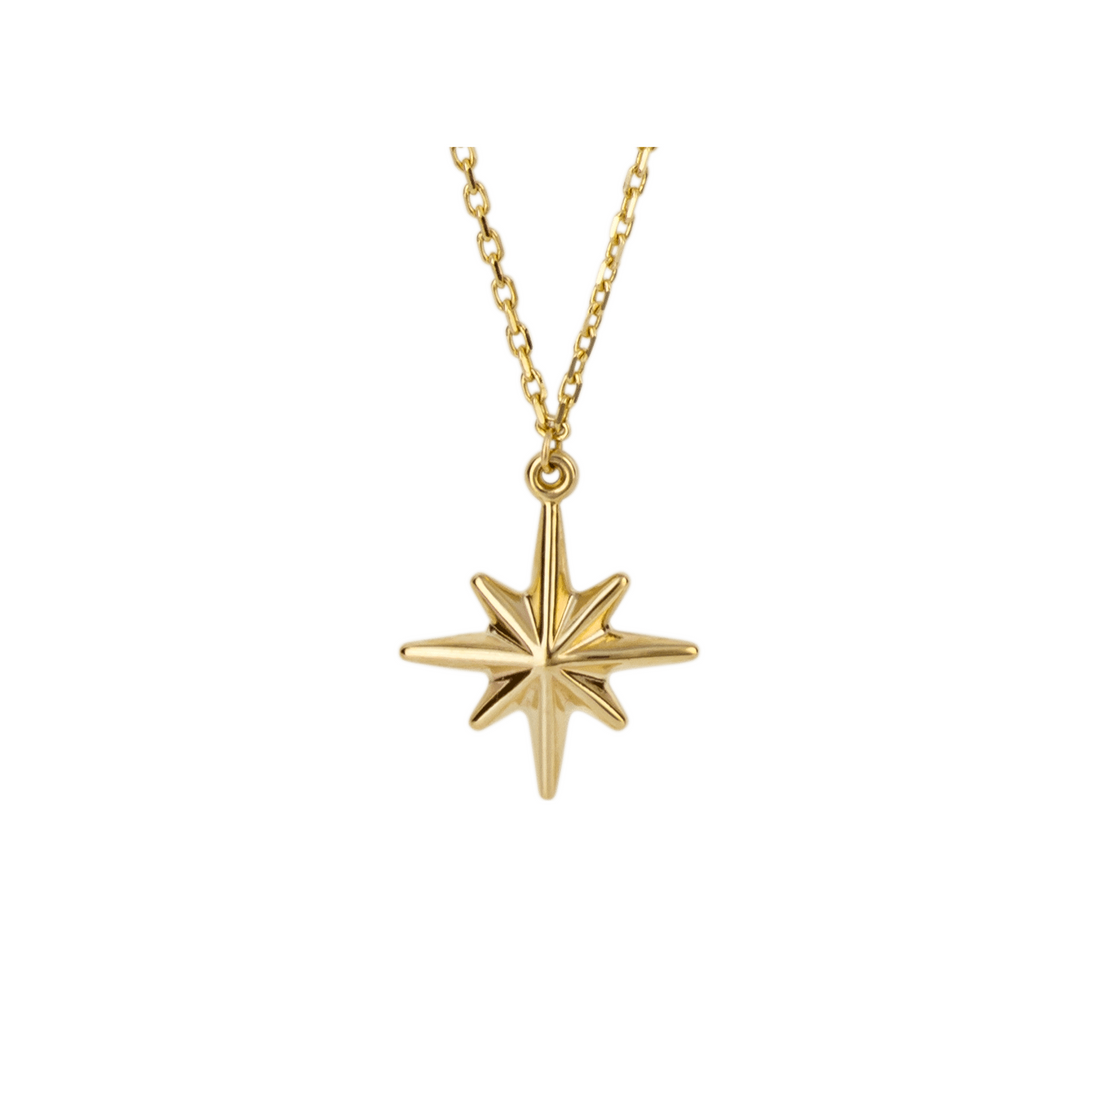 Starburst Necklace in 9ct Yellow Gold - Robert Anthony Jewellers, Edinburgh